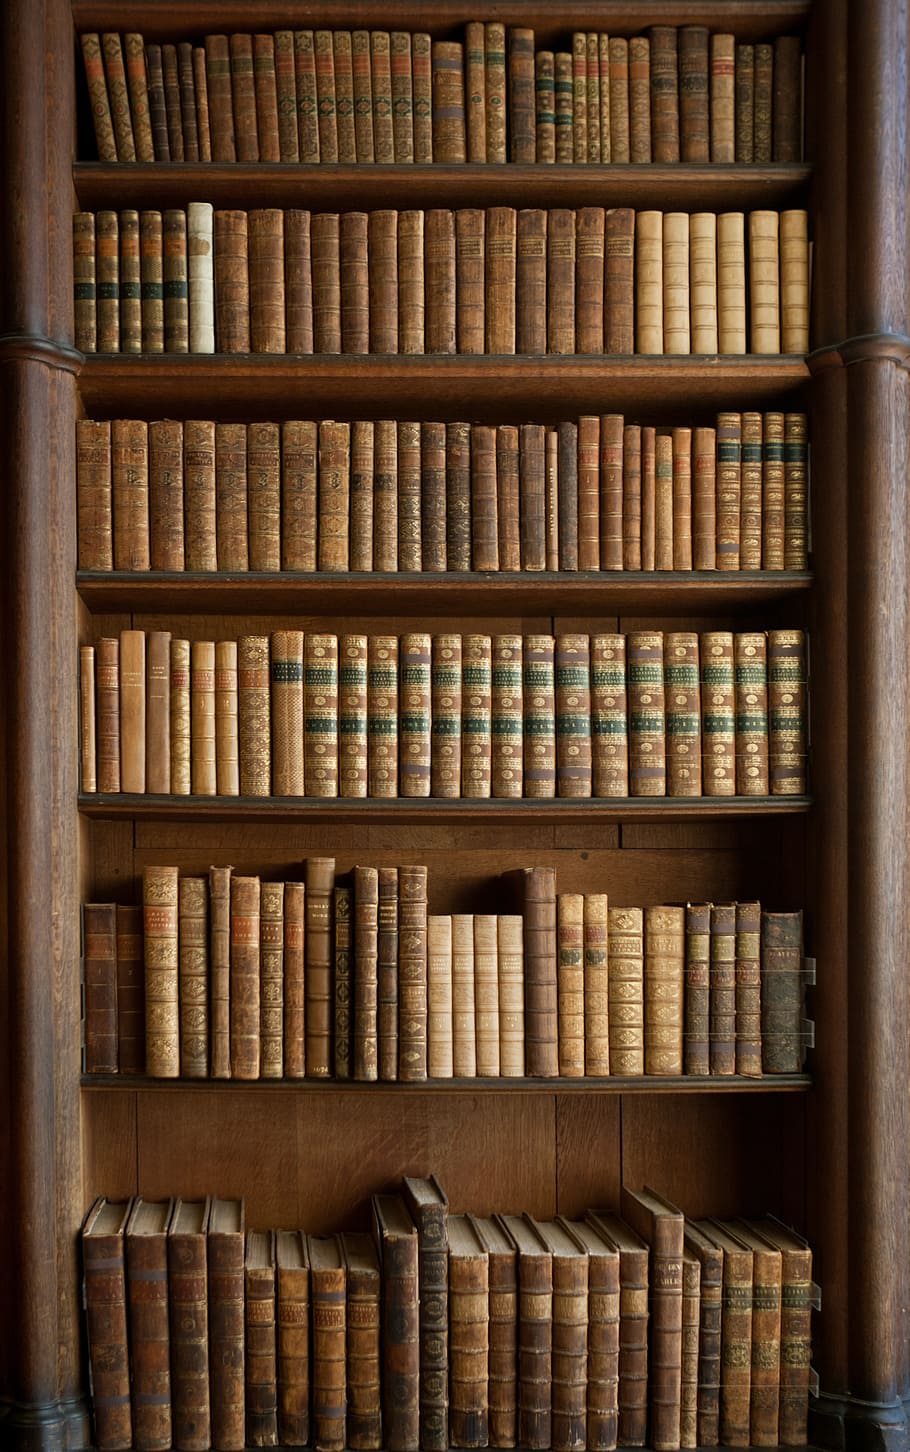 marrón, lote de libros, madera, estante, libros, estantería, libros antiguos, histórico, antiguo, felbrigg hall